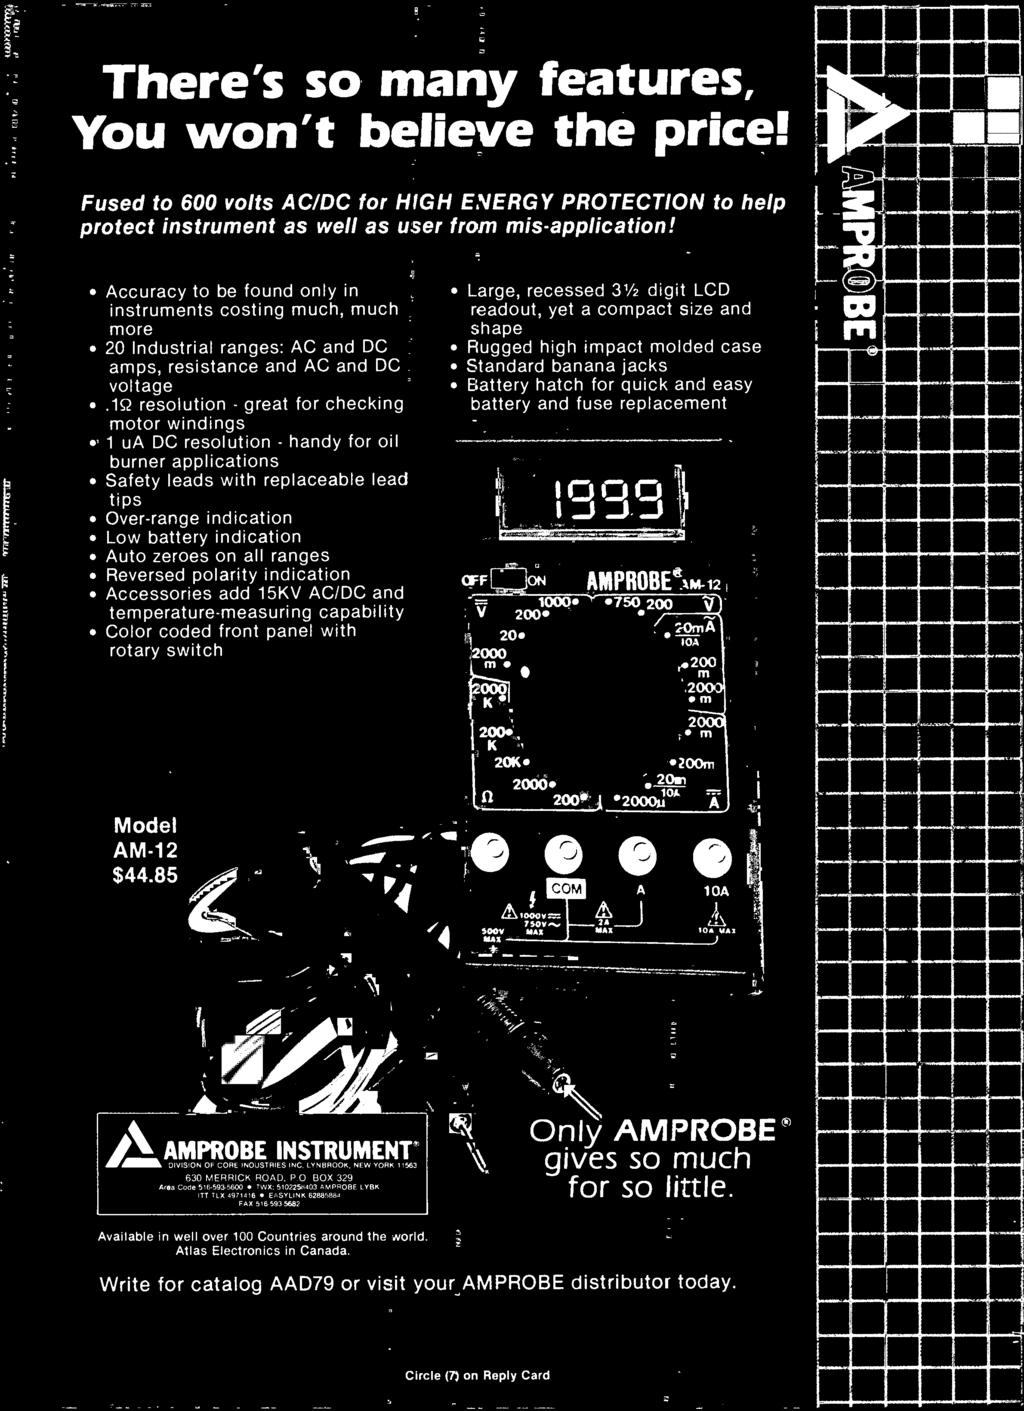 AMPROBE dm73/ C pen-shaped Digital Multimeter